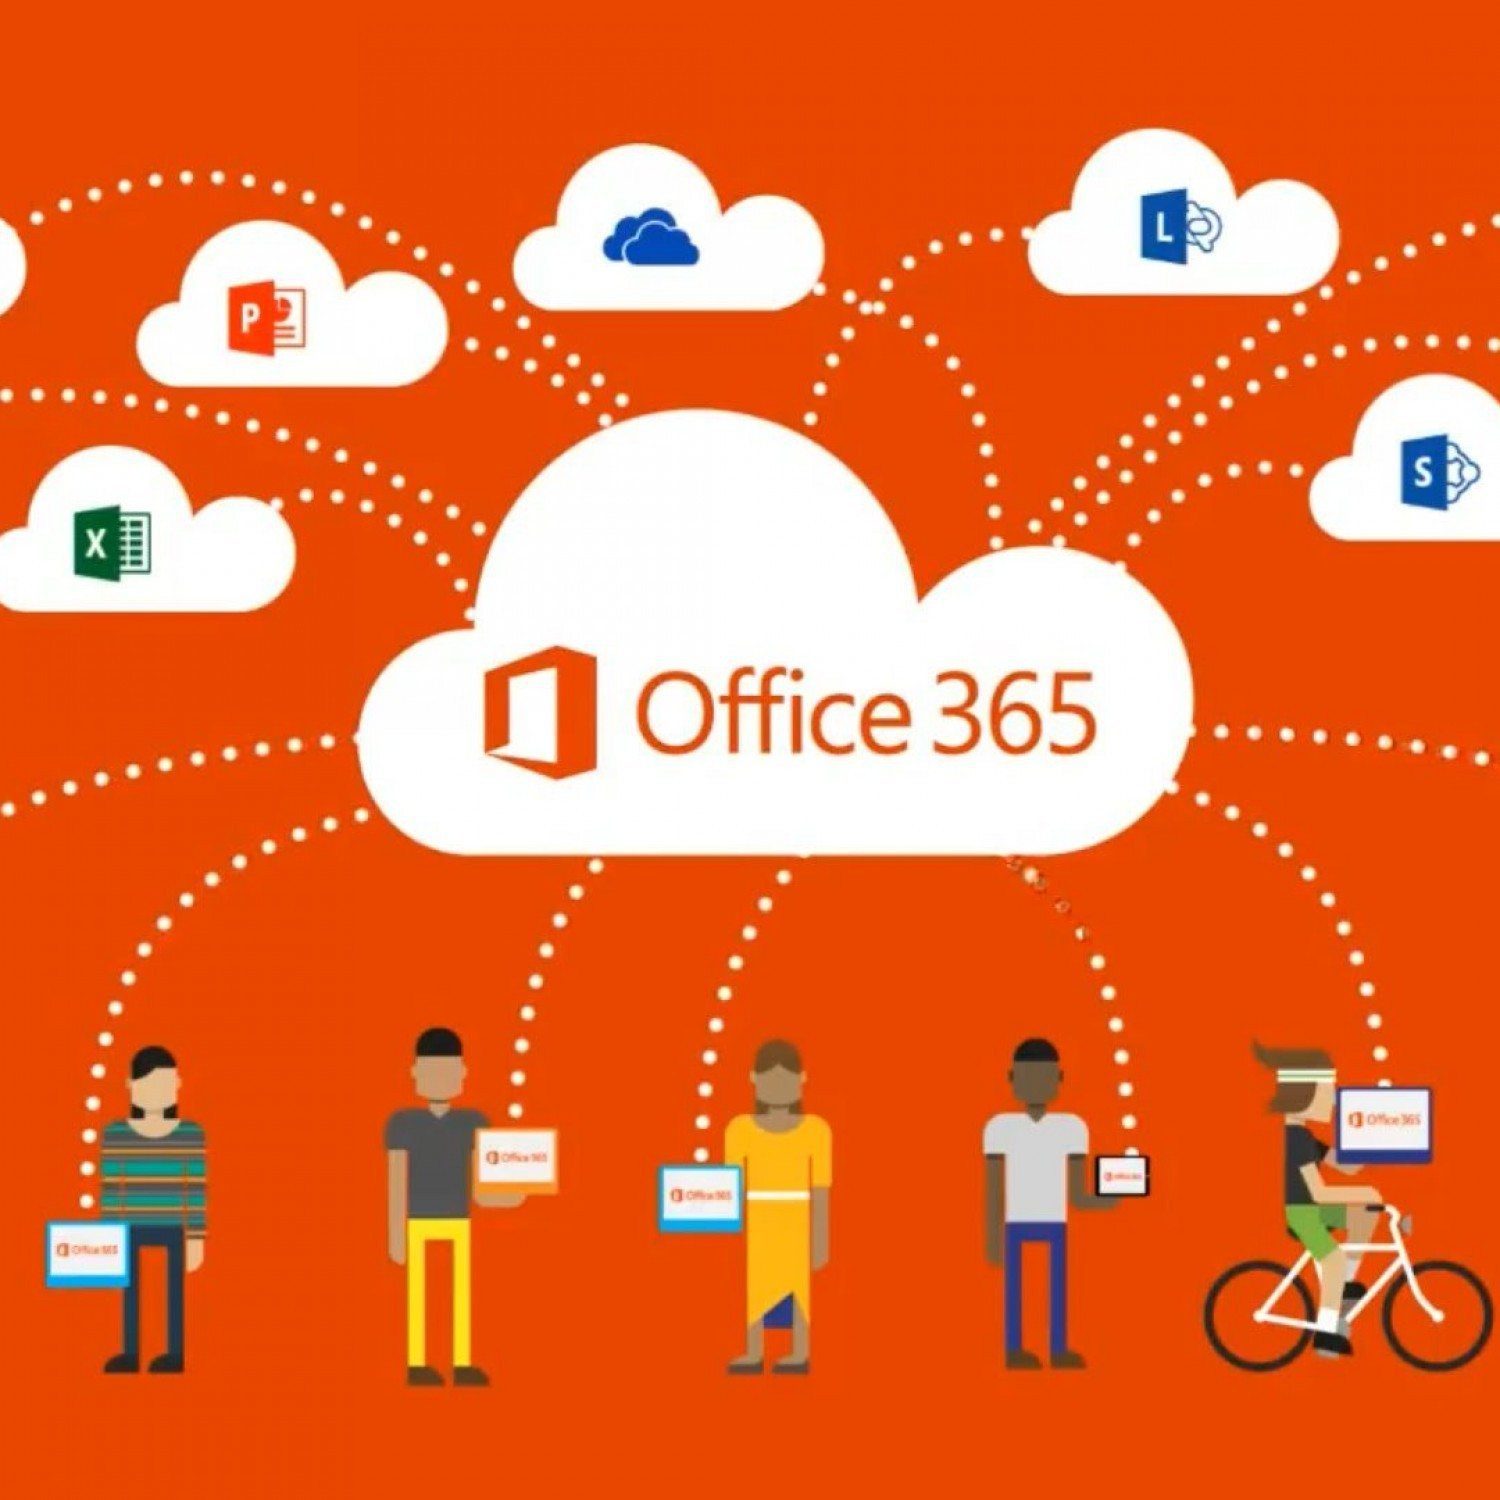 Office 365 | Office 365 untuk Tel-U
